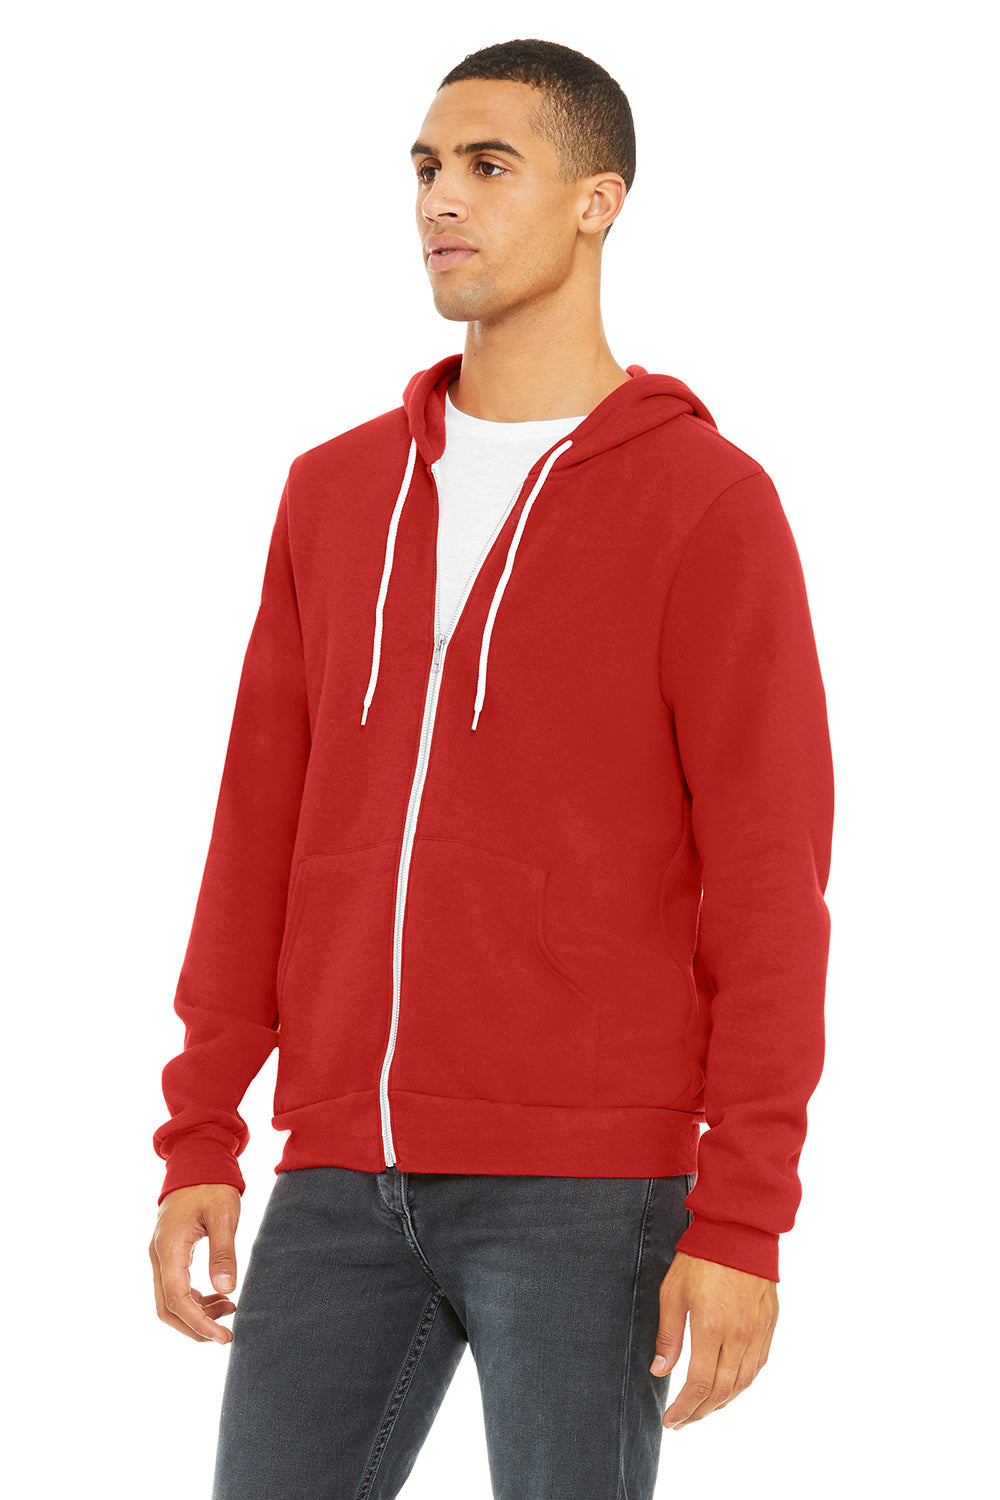 Bella + Canvas BC3739/3739 Mens Fleece Full Zip Hooded Sweatshirt Hoodie Red Model 3Q